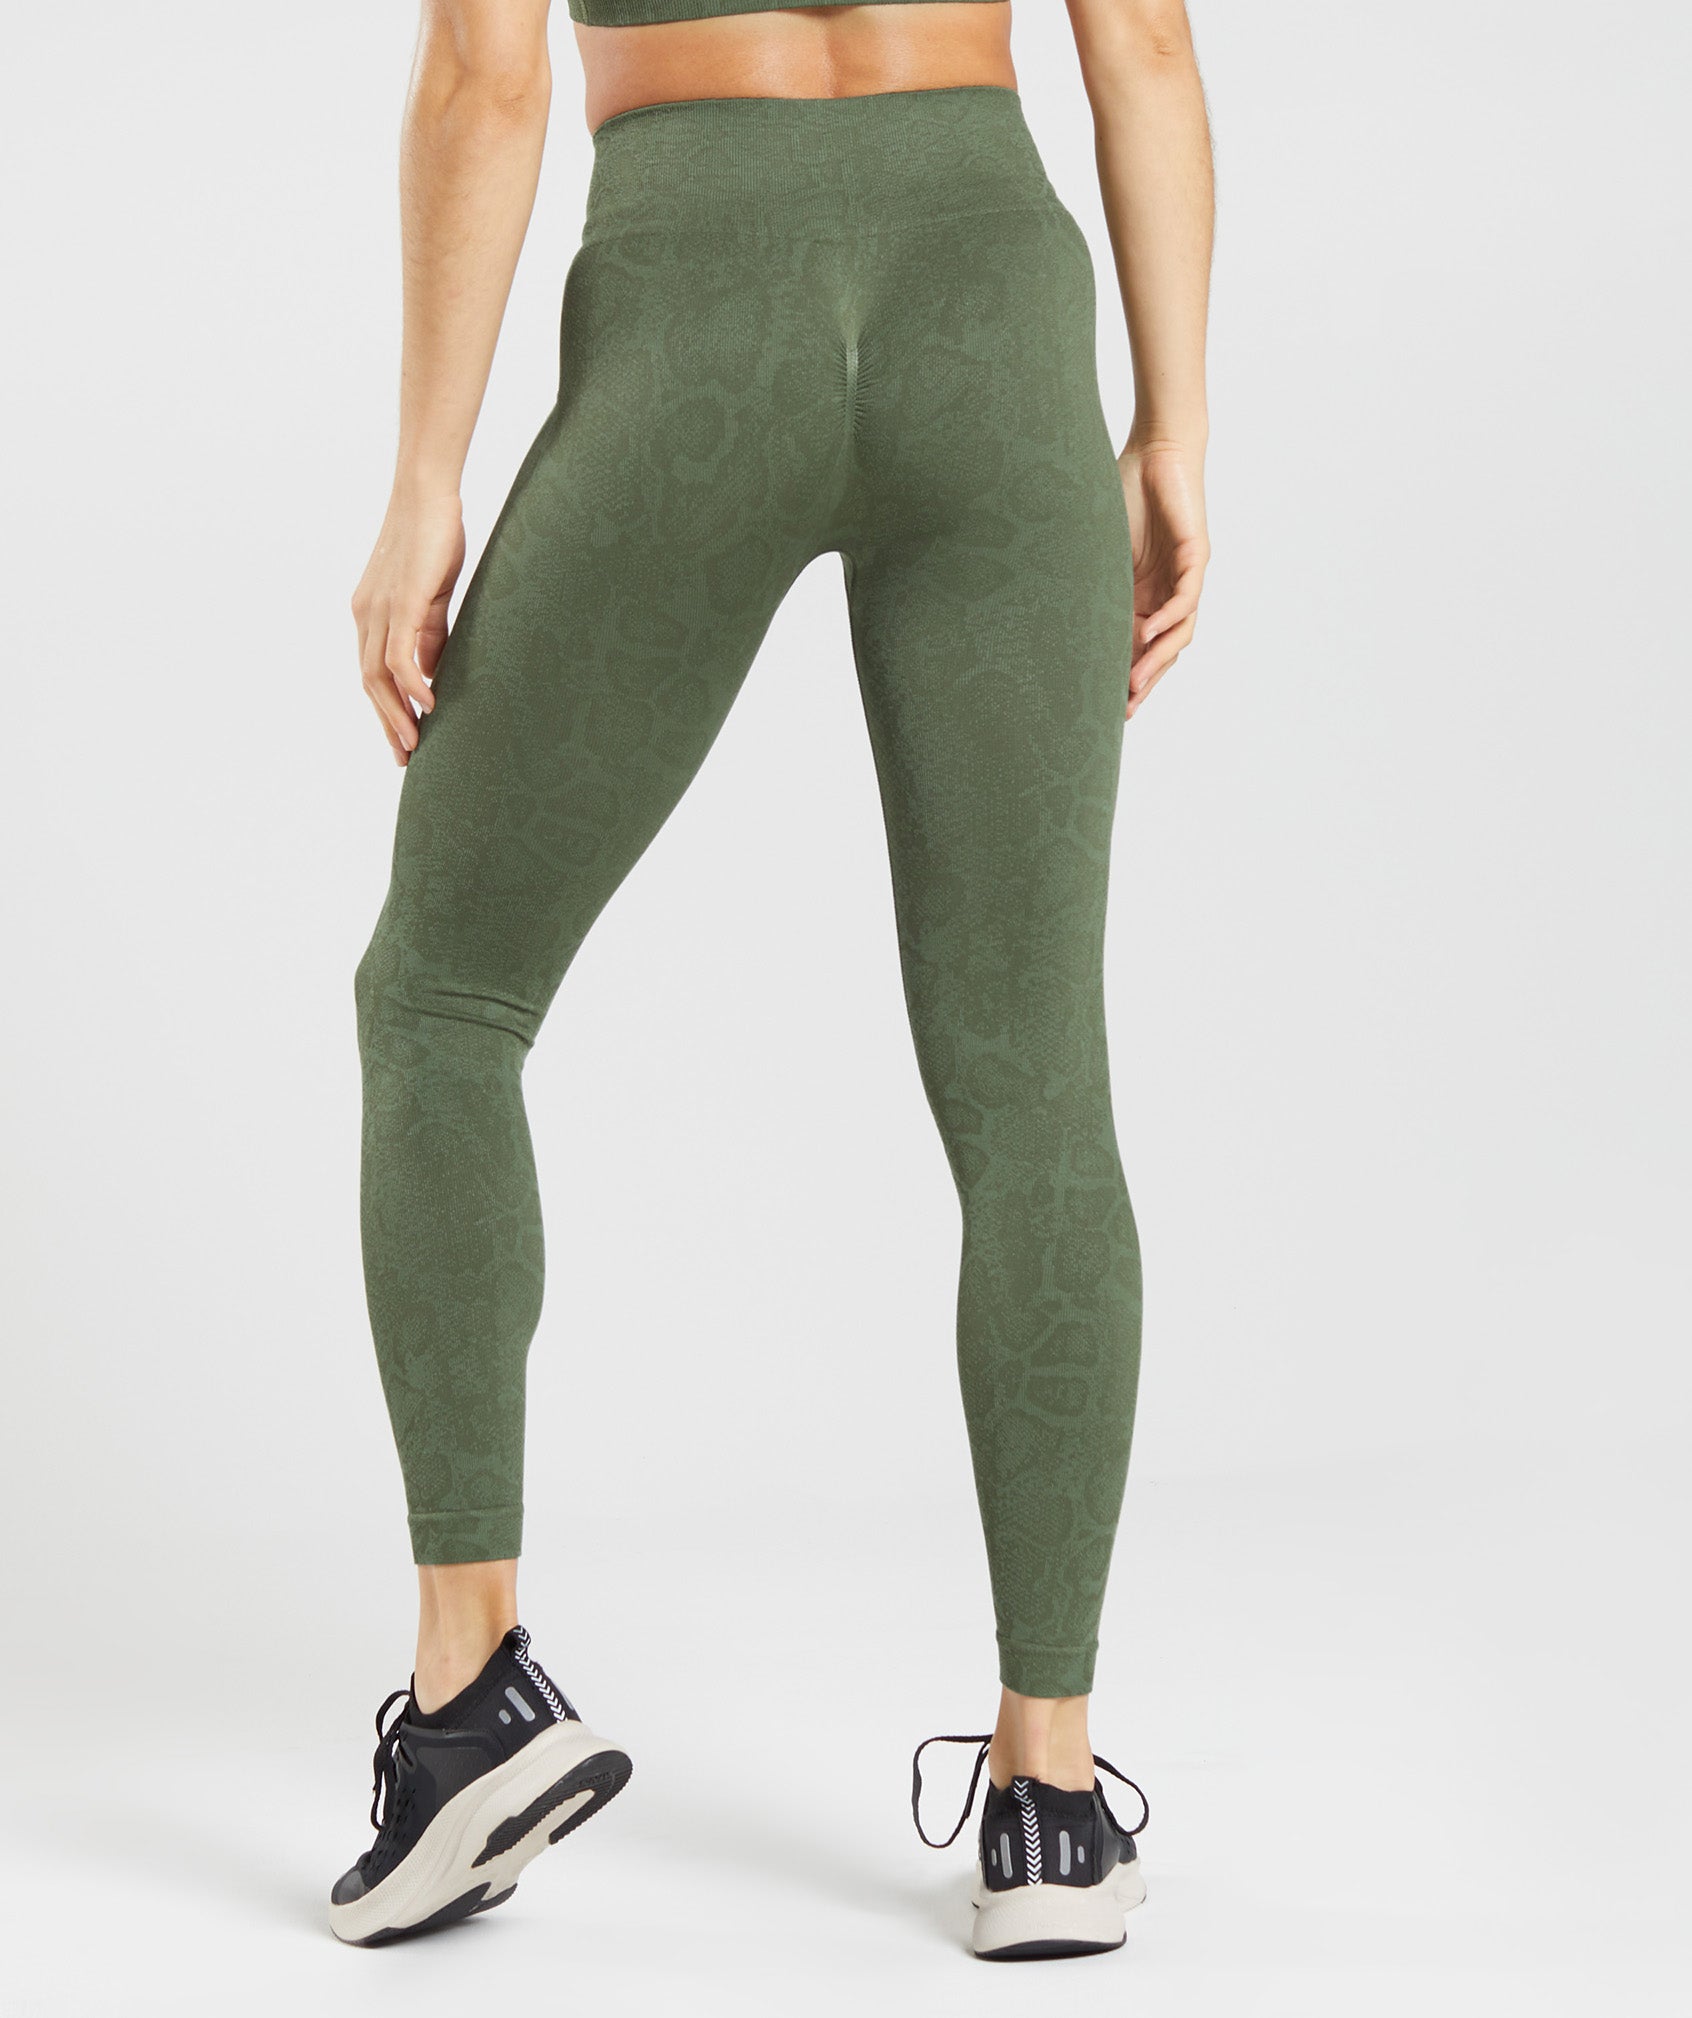 Women's Influential 3/4 Gym Leggings - Lilypad Green Animal Print